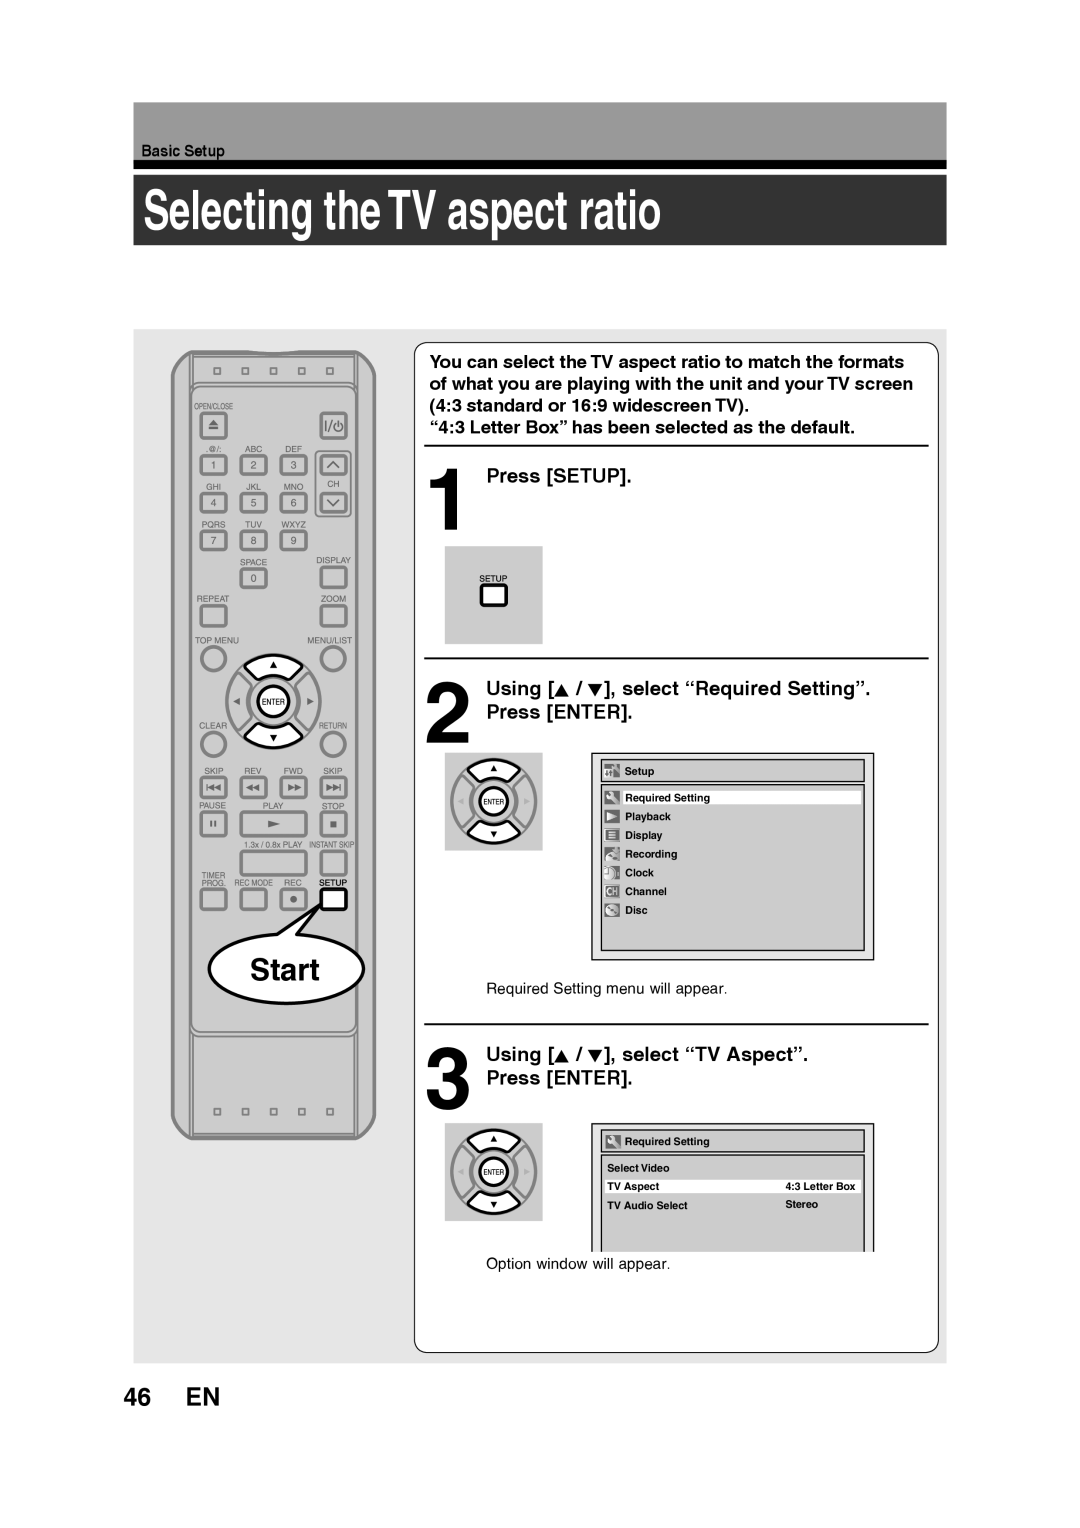 Toshiba D-RW2SU/D-RW2SC Selecting the TV aspect ratio, 46 EN, Using K / L, select “TV Aspect” Press ENTER, Start, Stereo 